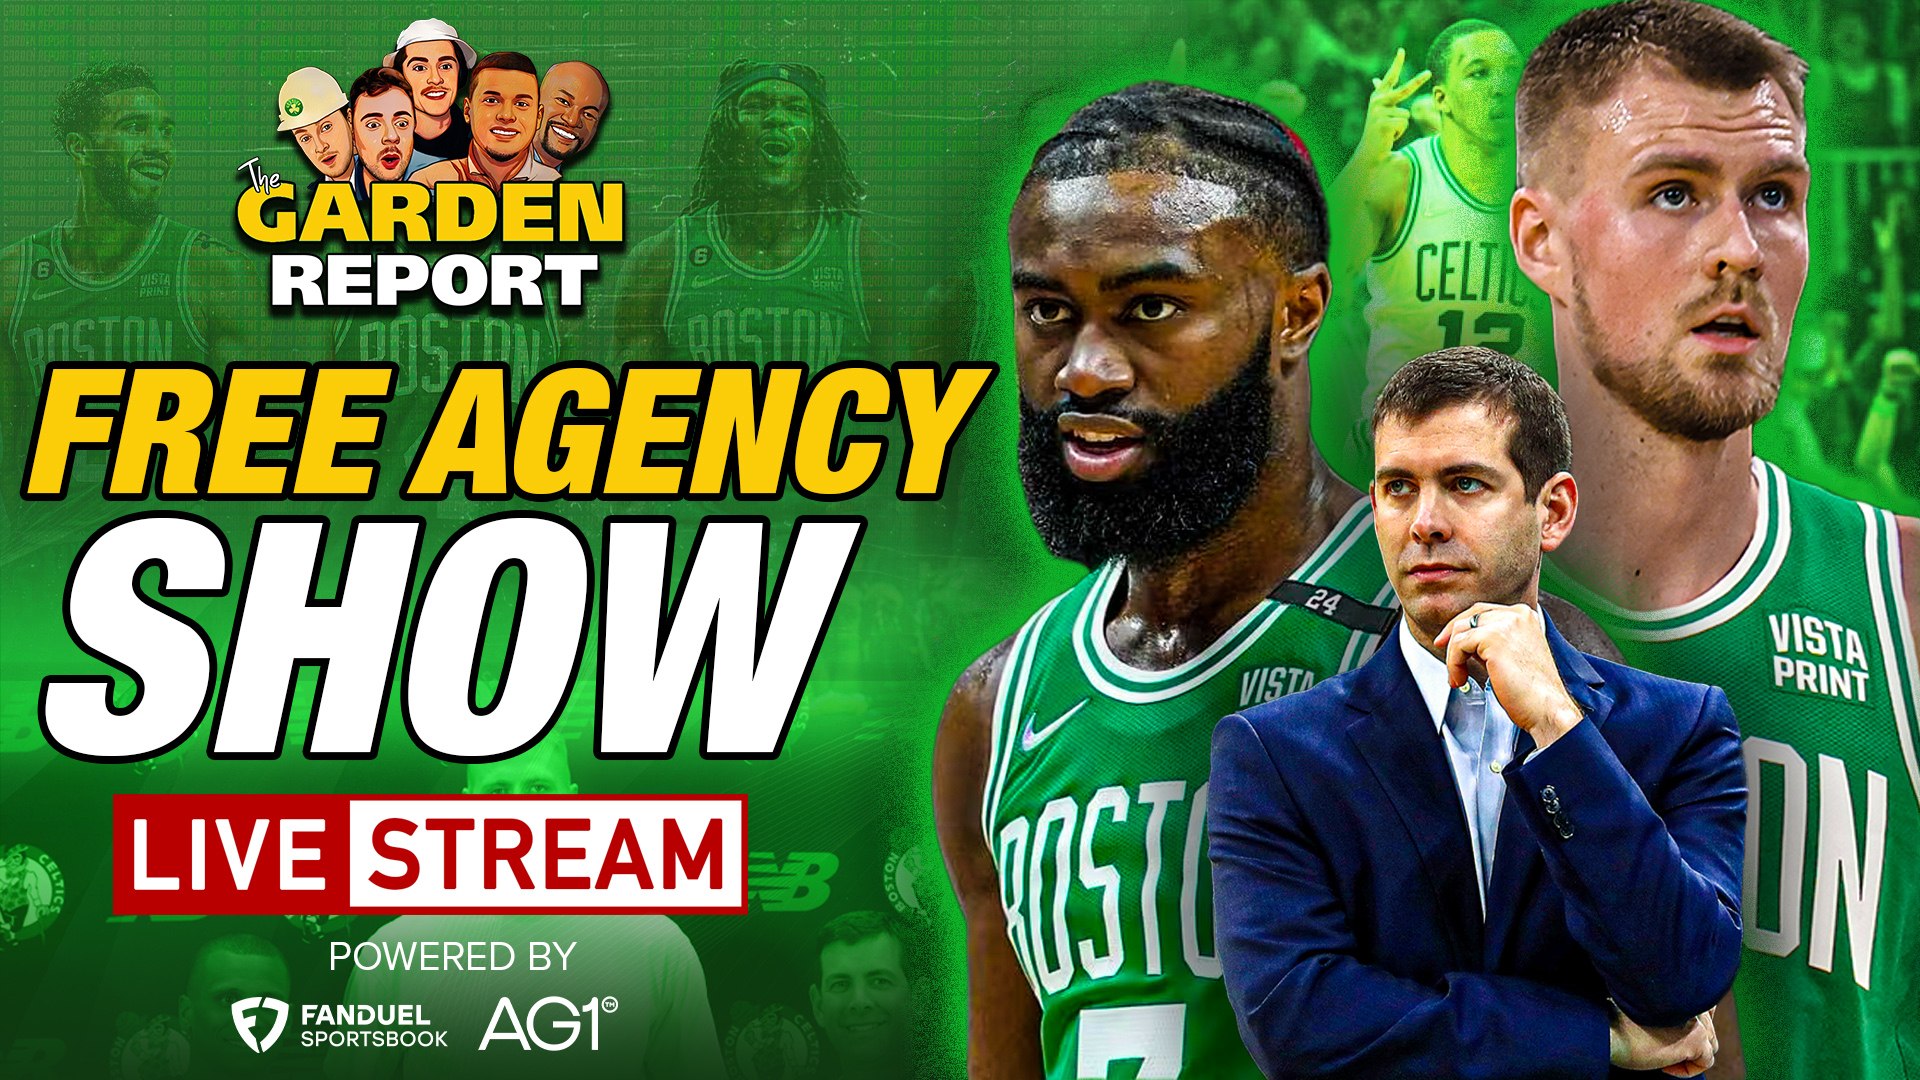 LIVE_ Celtics Free Agency Countdown Show _ Garden Report